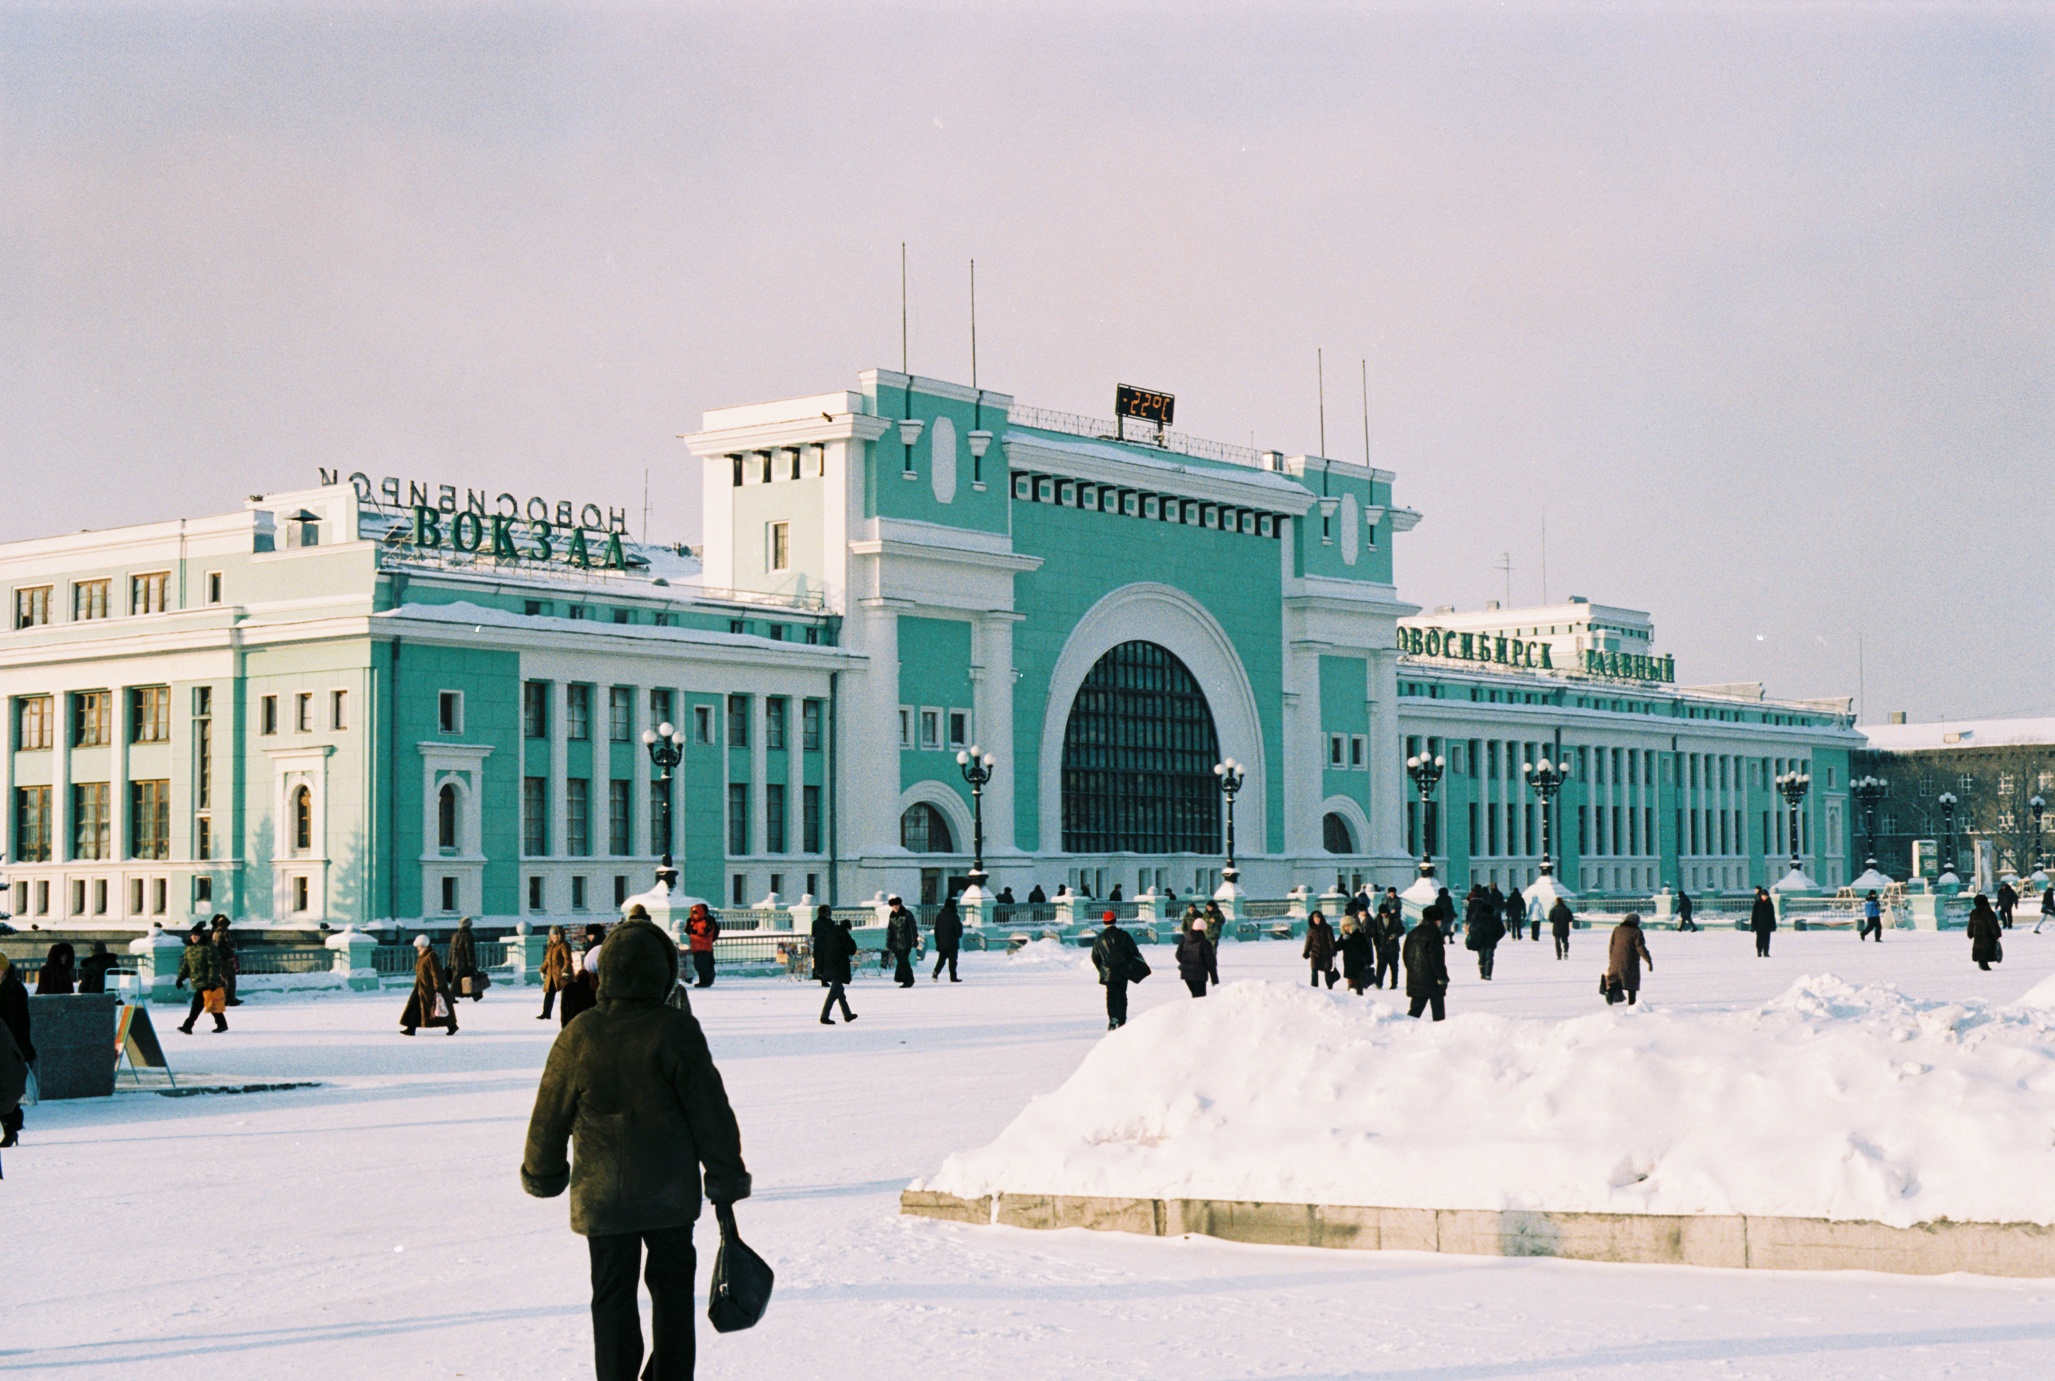 Novosibirsk Railway Station (Photo: projects21.wordpress.com)